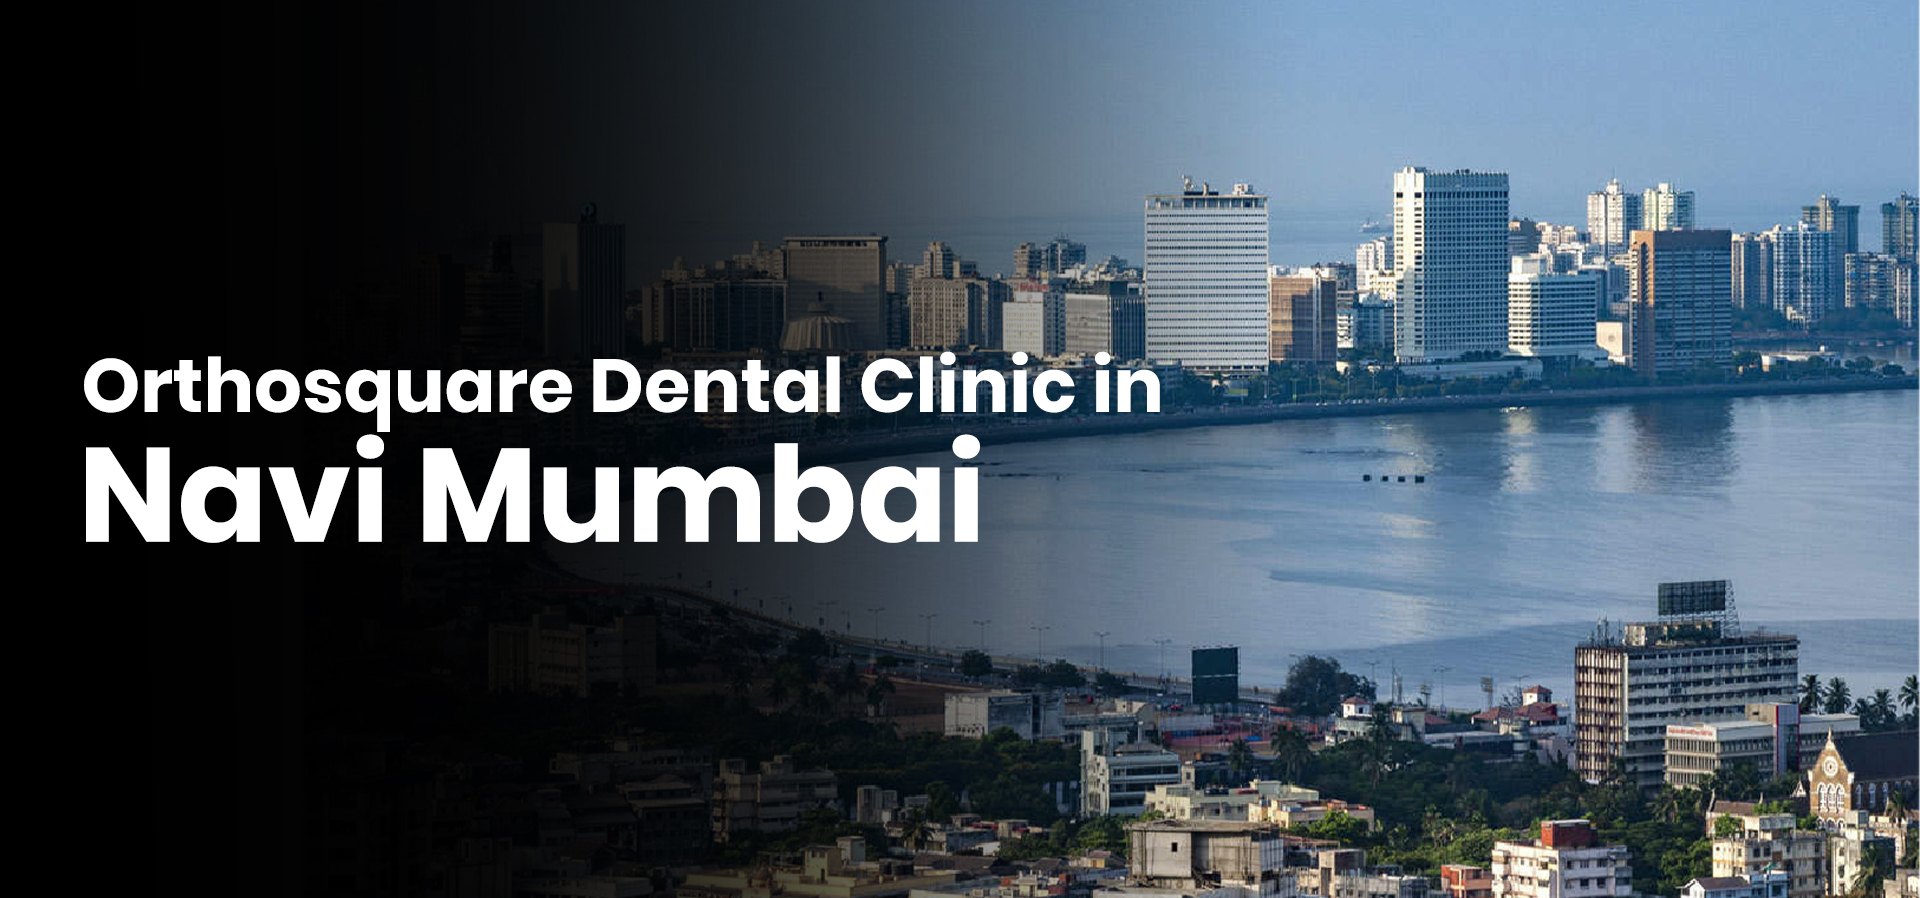 Navi Mumbai  orthosquare dental clinic